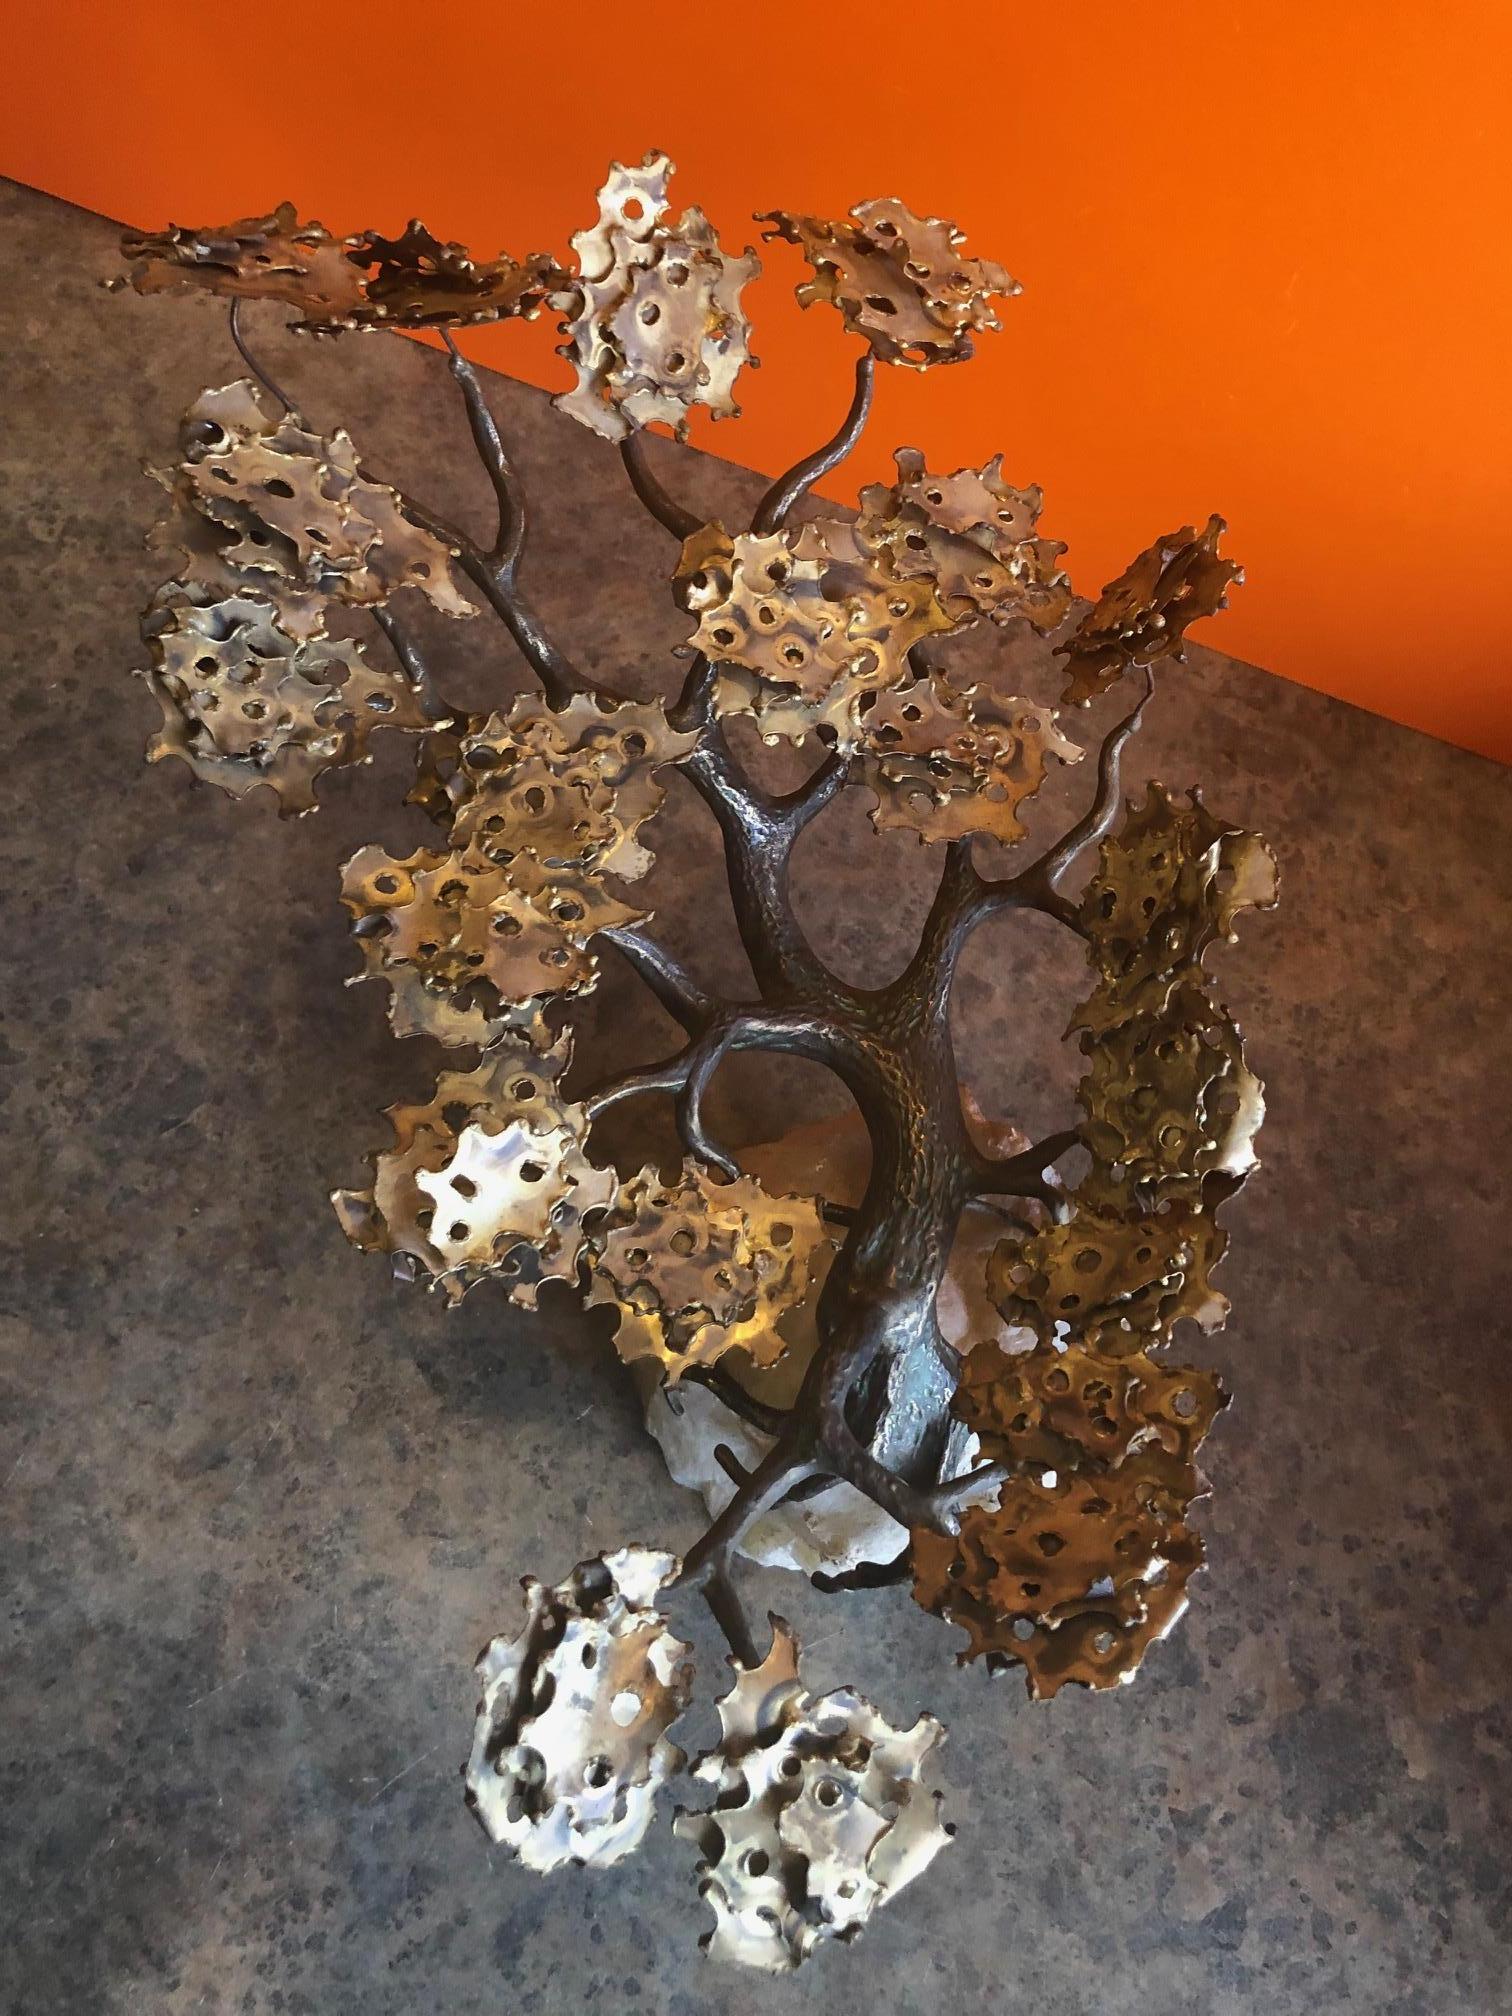 Metal Bonzai Tree Sculpture on Quartz Base by C. Jere for Artisian House